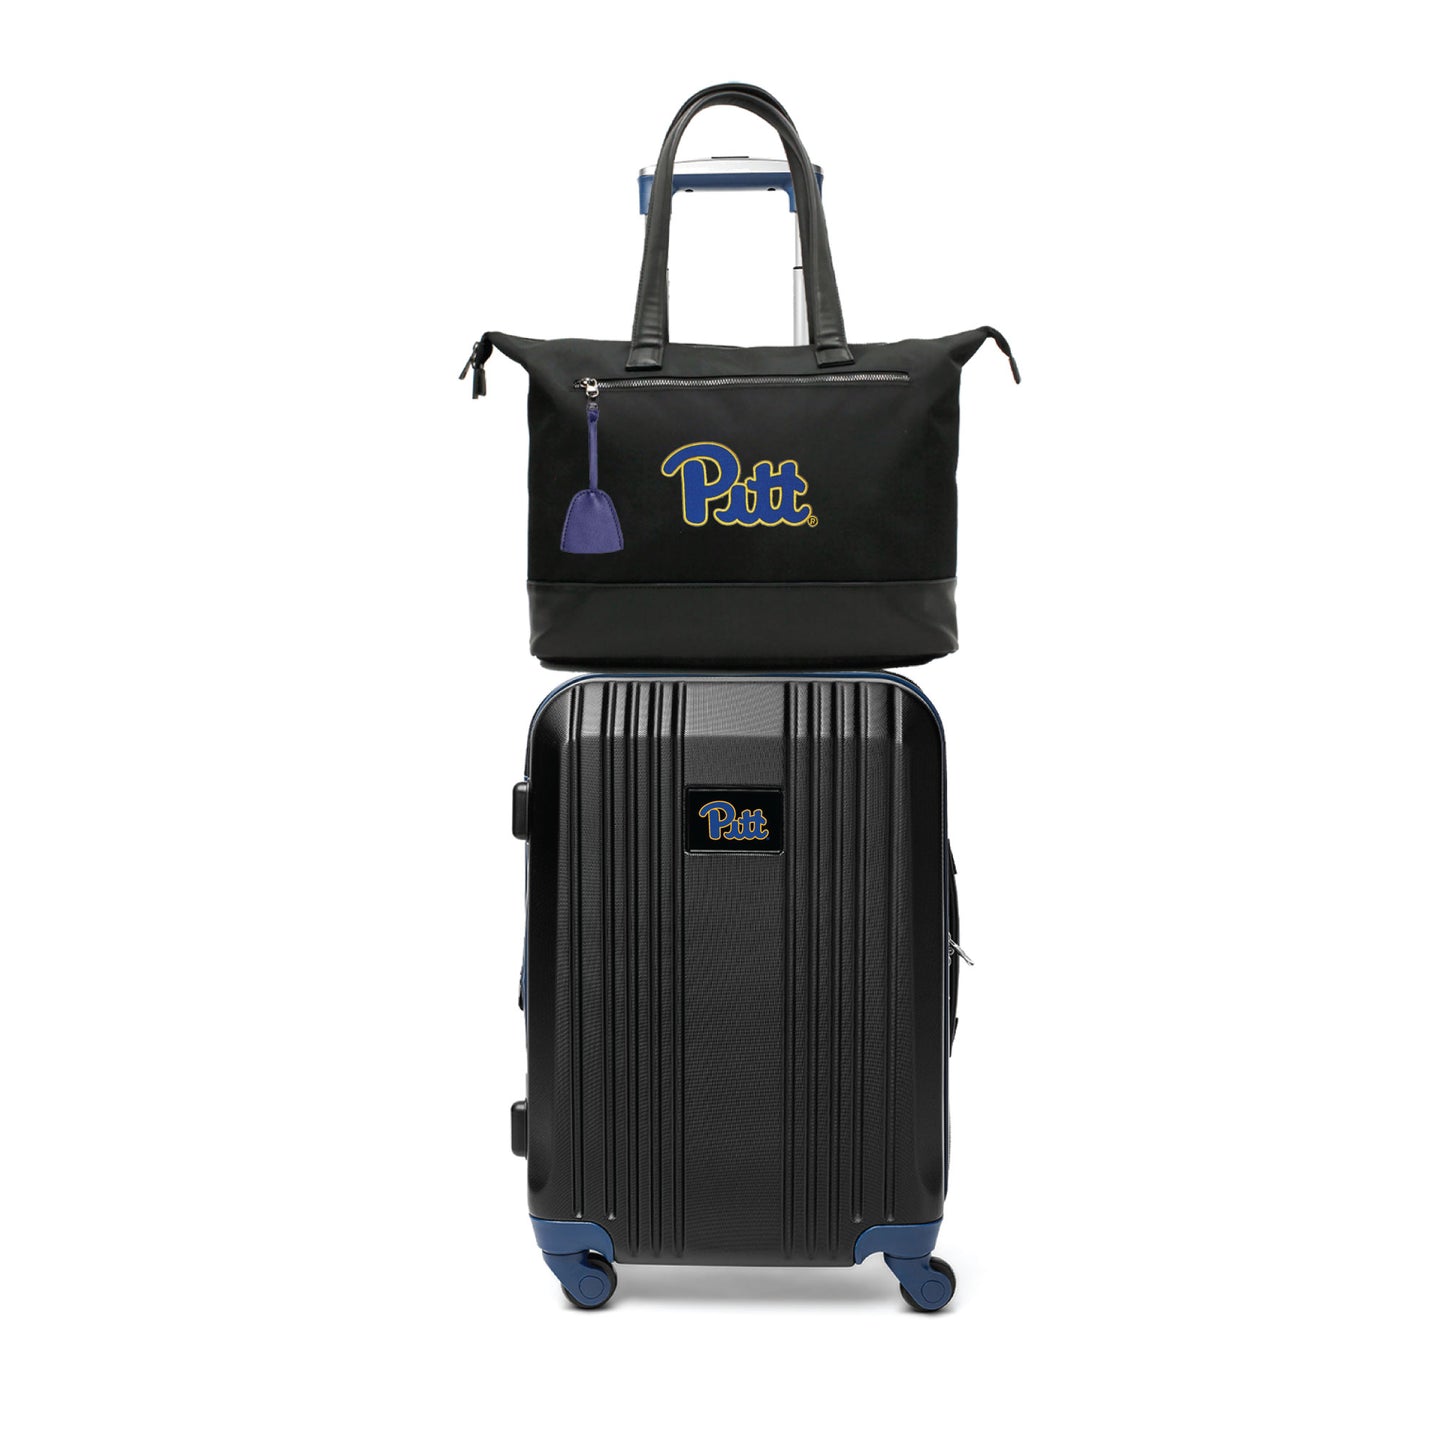 Pittsburgh Panthers Premium Laptop Tote Bag and Luggage Set